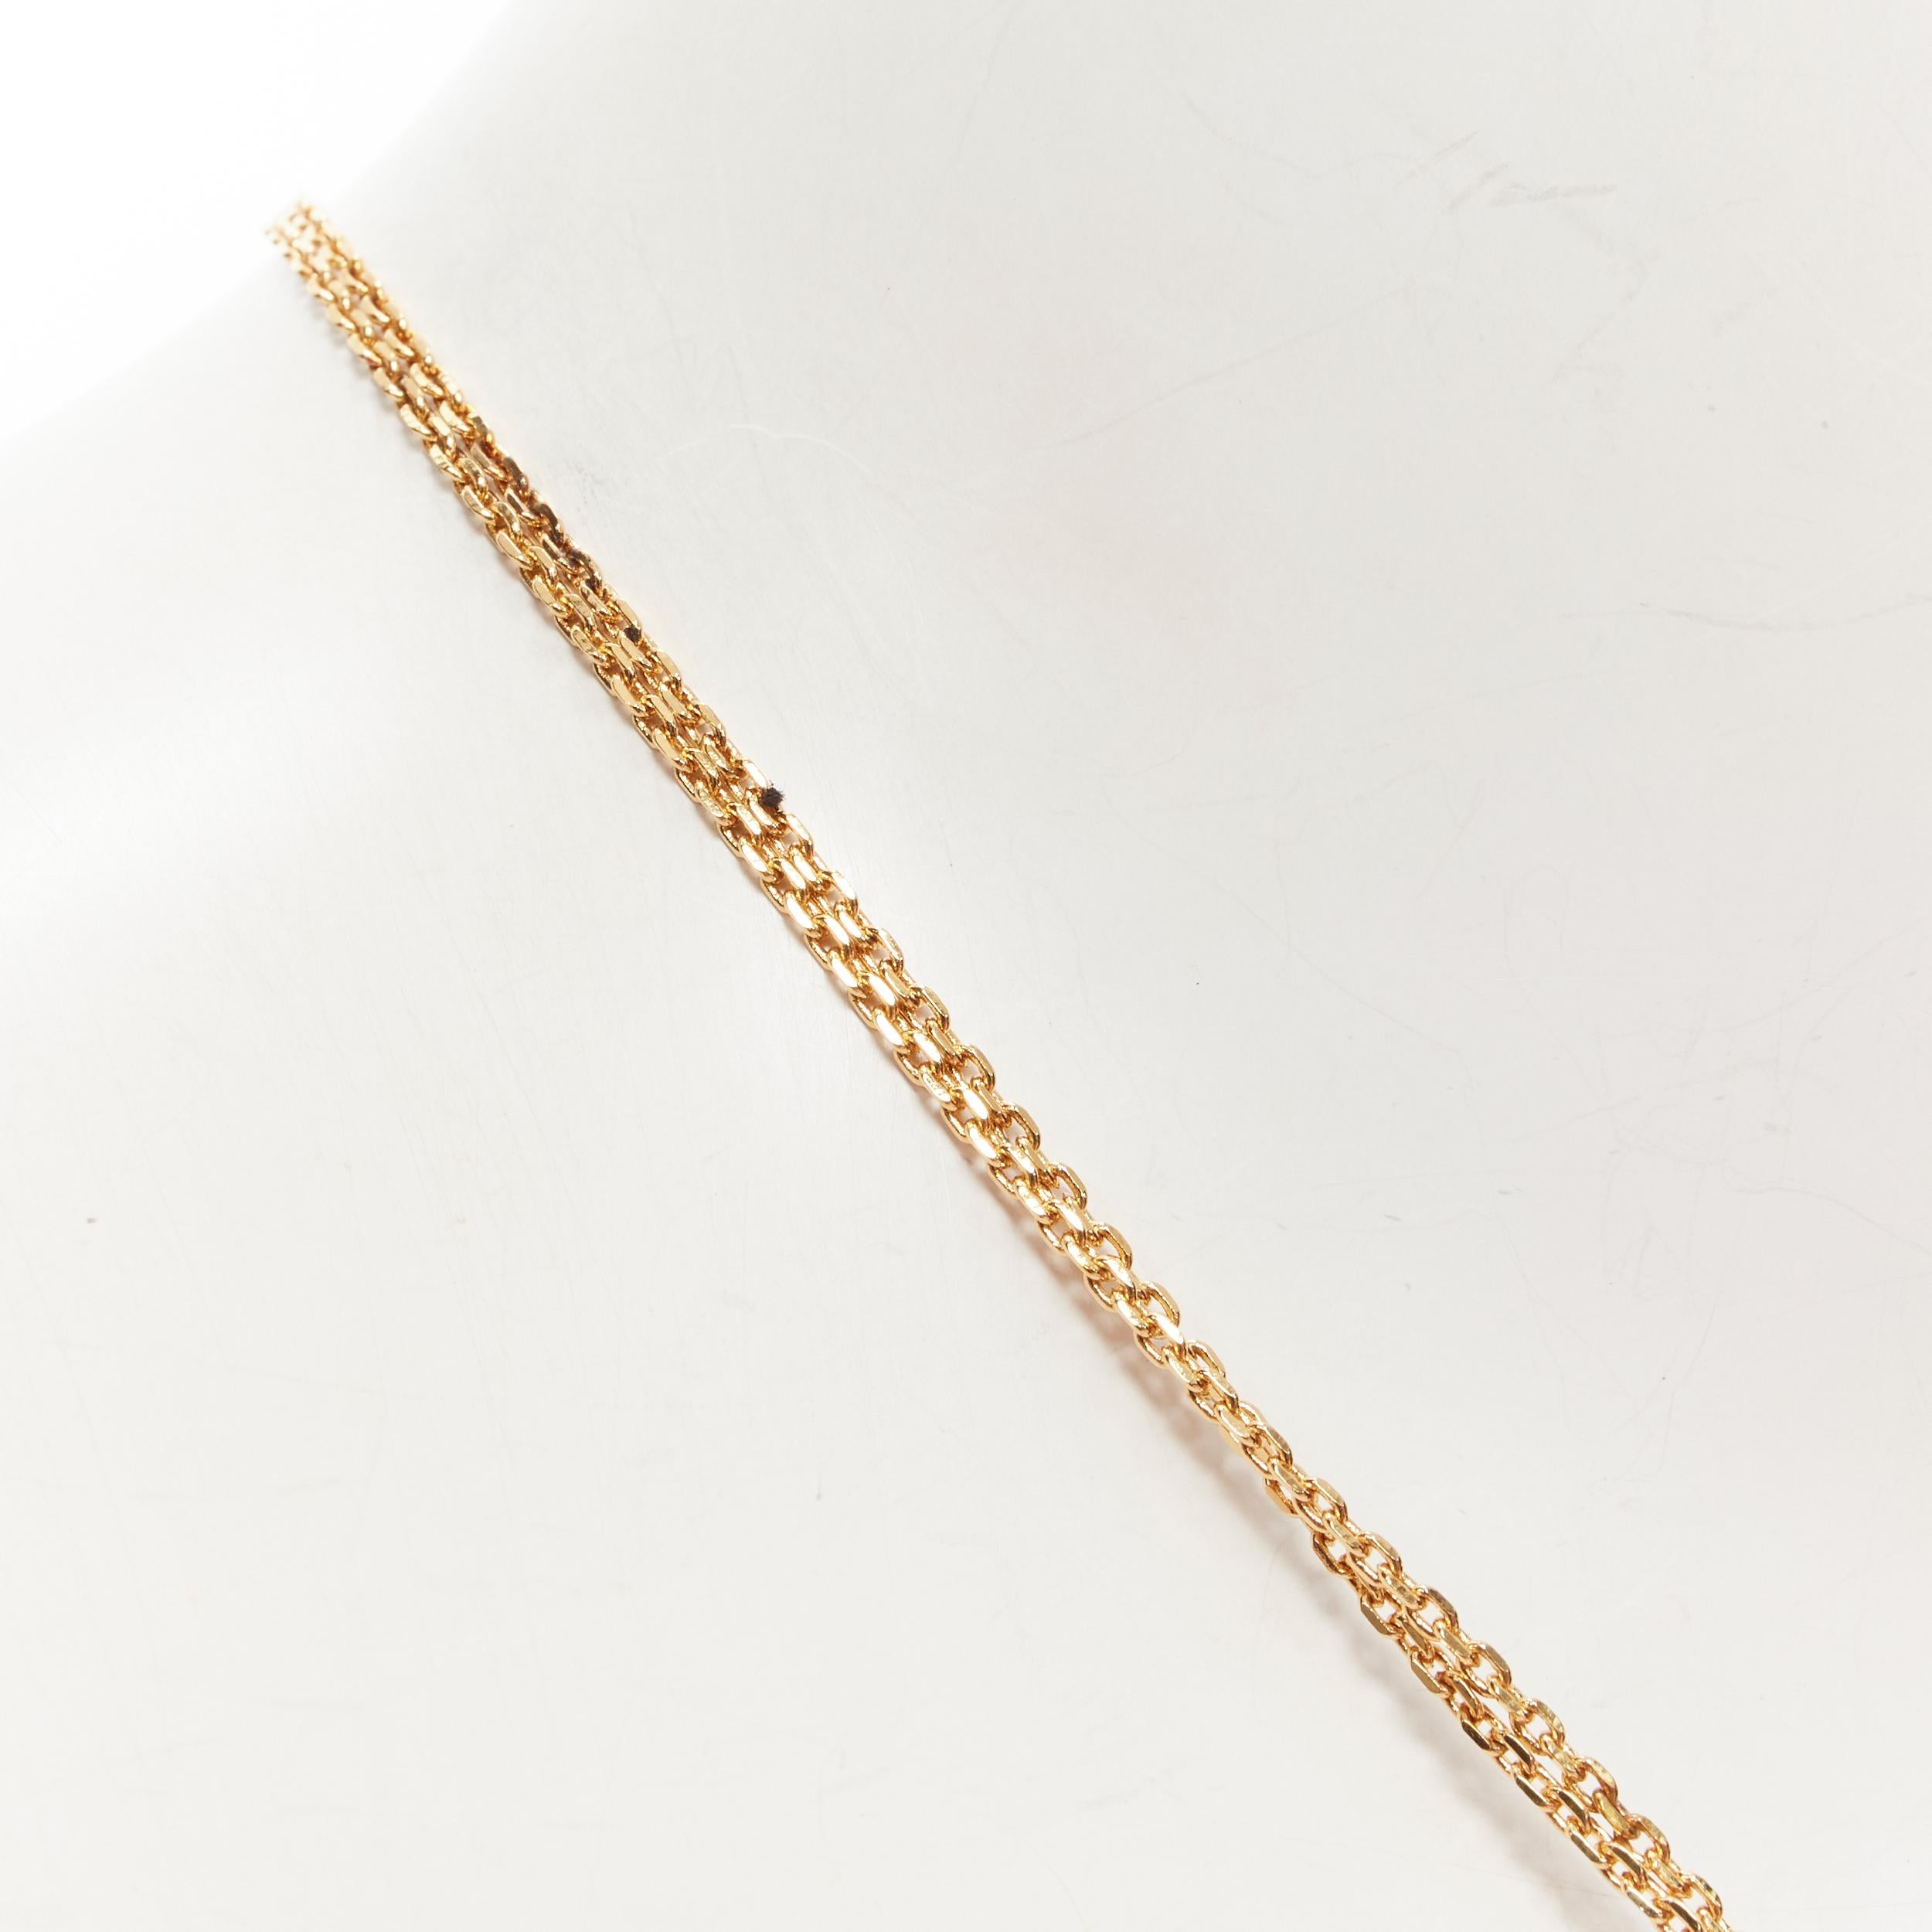 new VERSACE Medusa Safety Pin pendant gold tone nickel short necklace choker 1